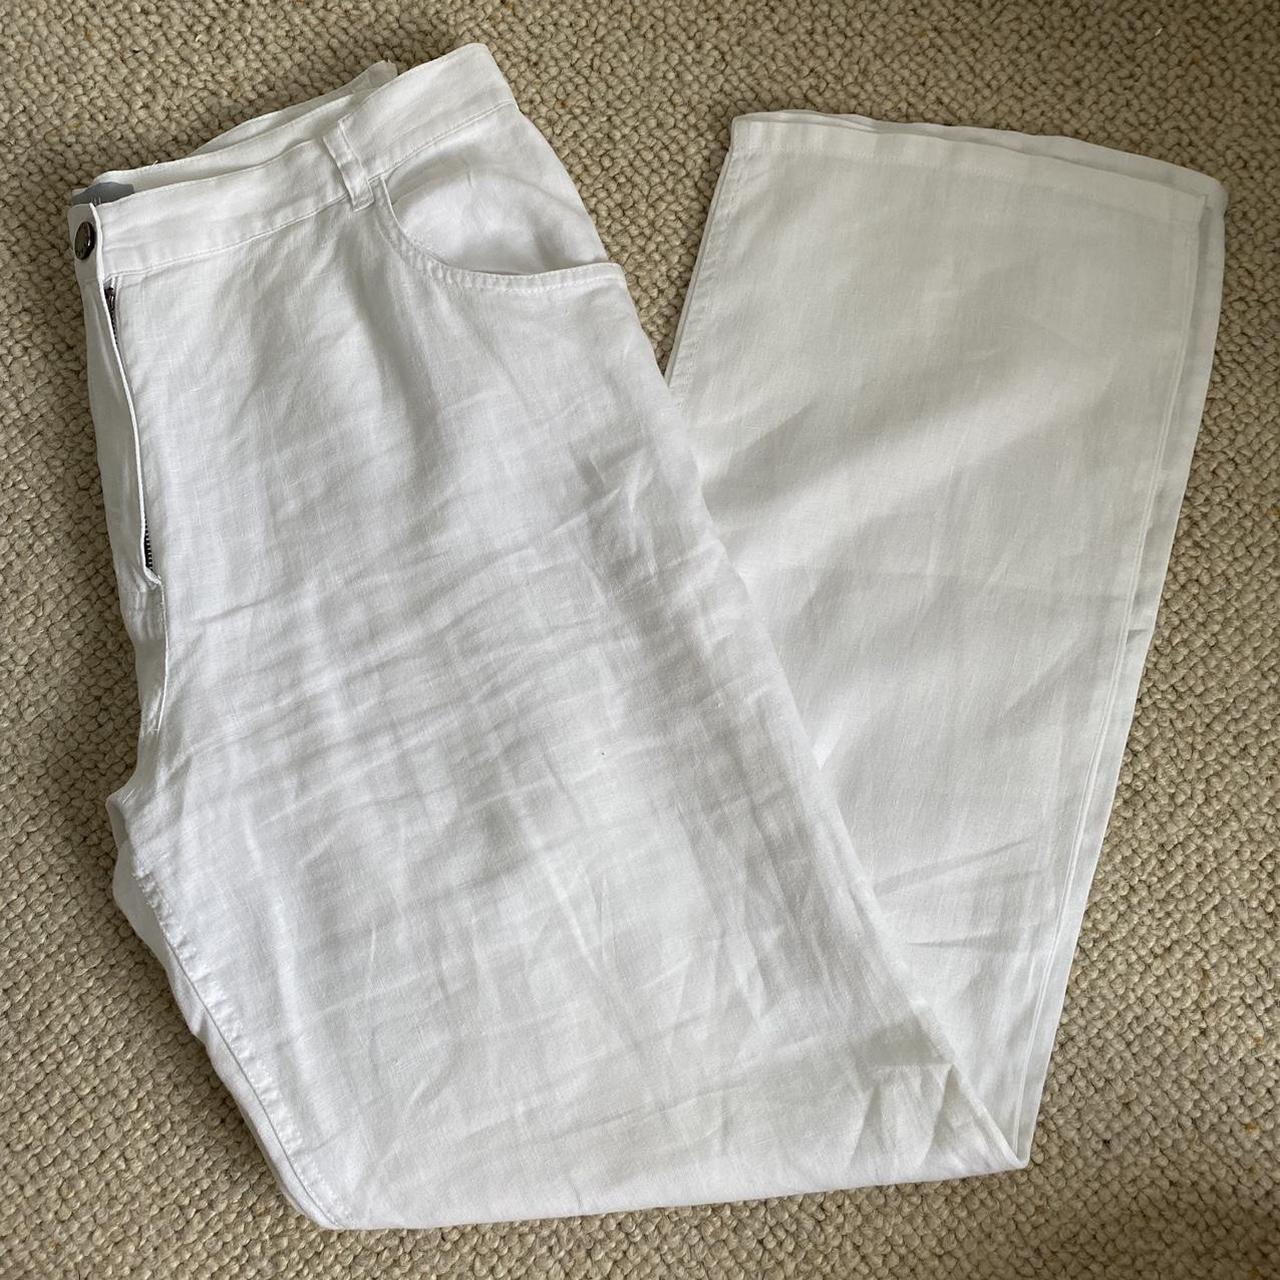 nicole farhi 100% linen trousers in white unsure... - Depop